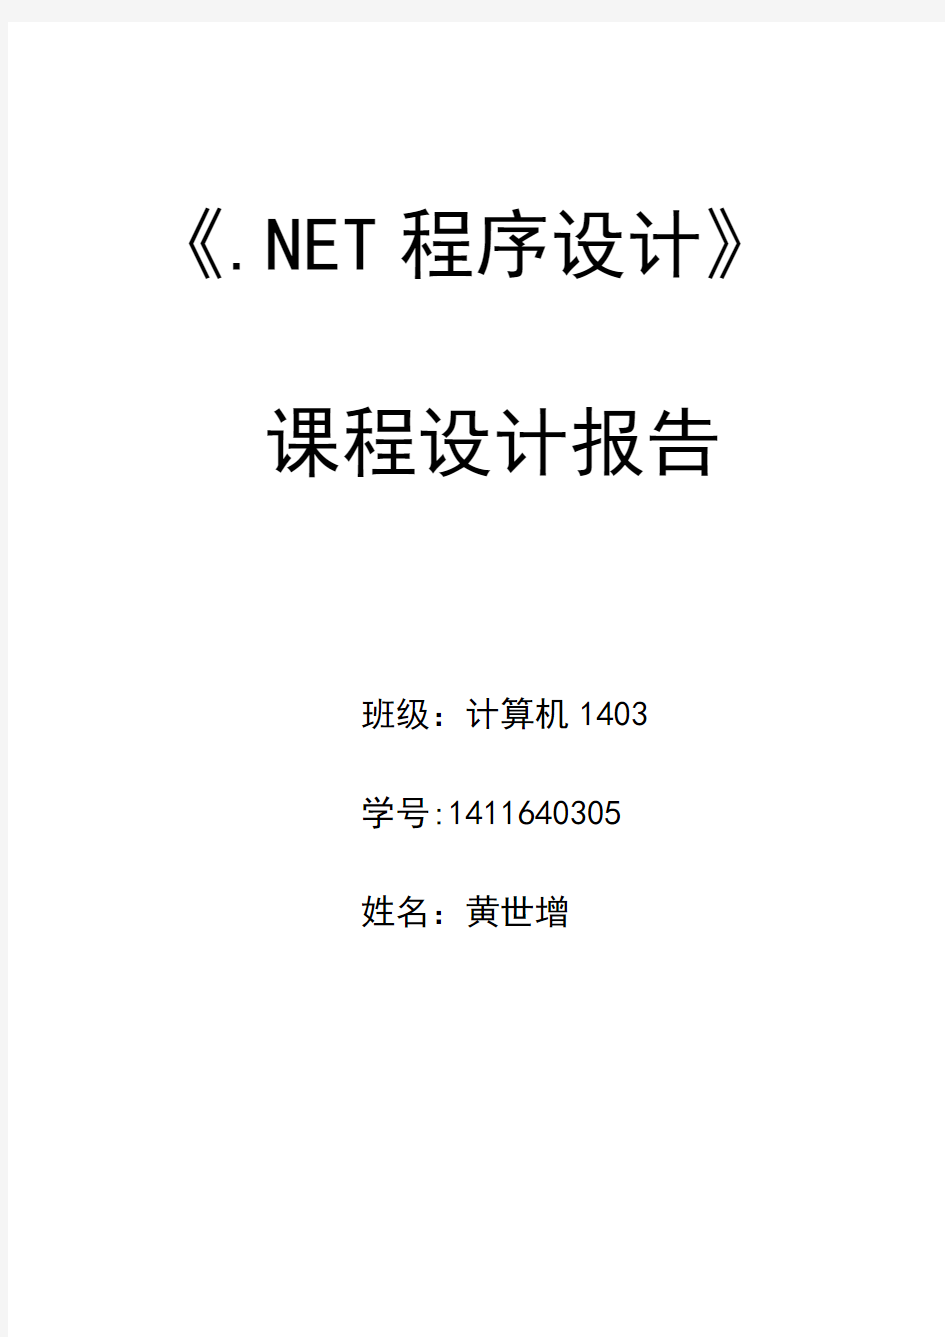 《.NET程序设计》课程设计报告.doc